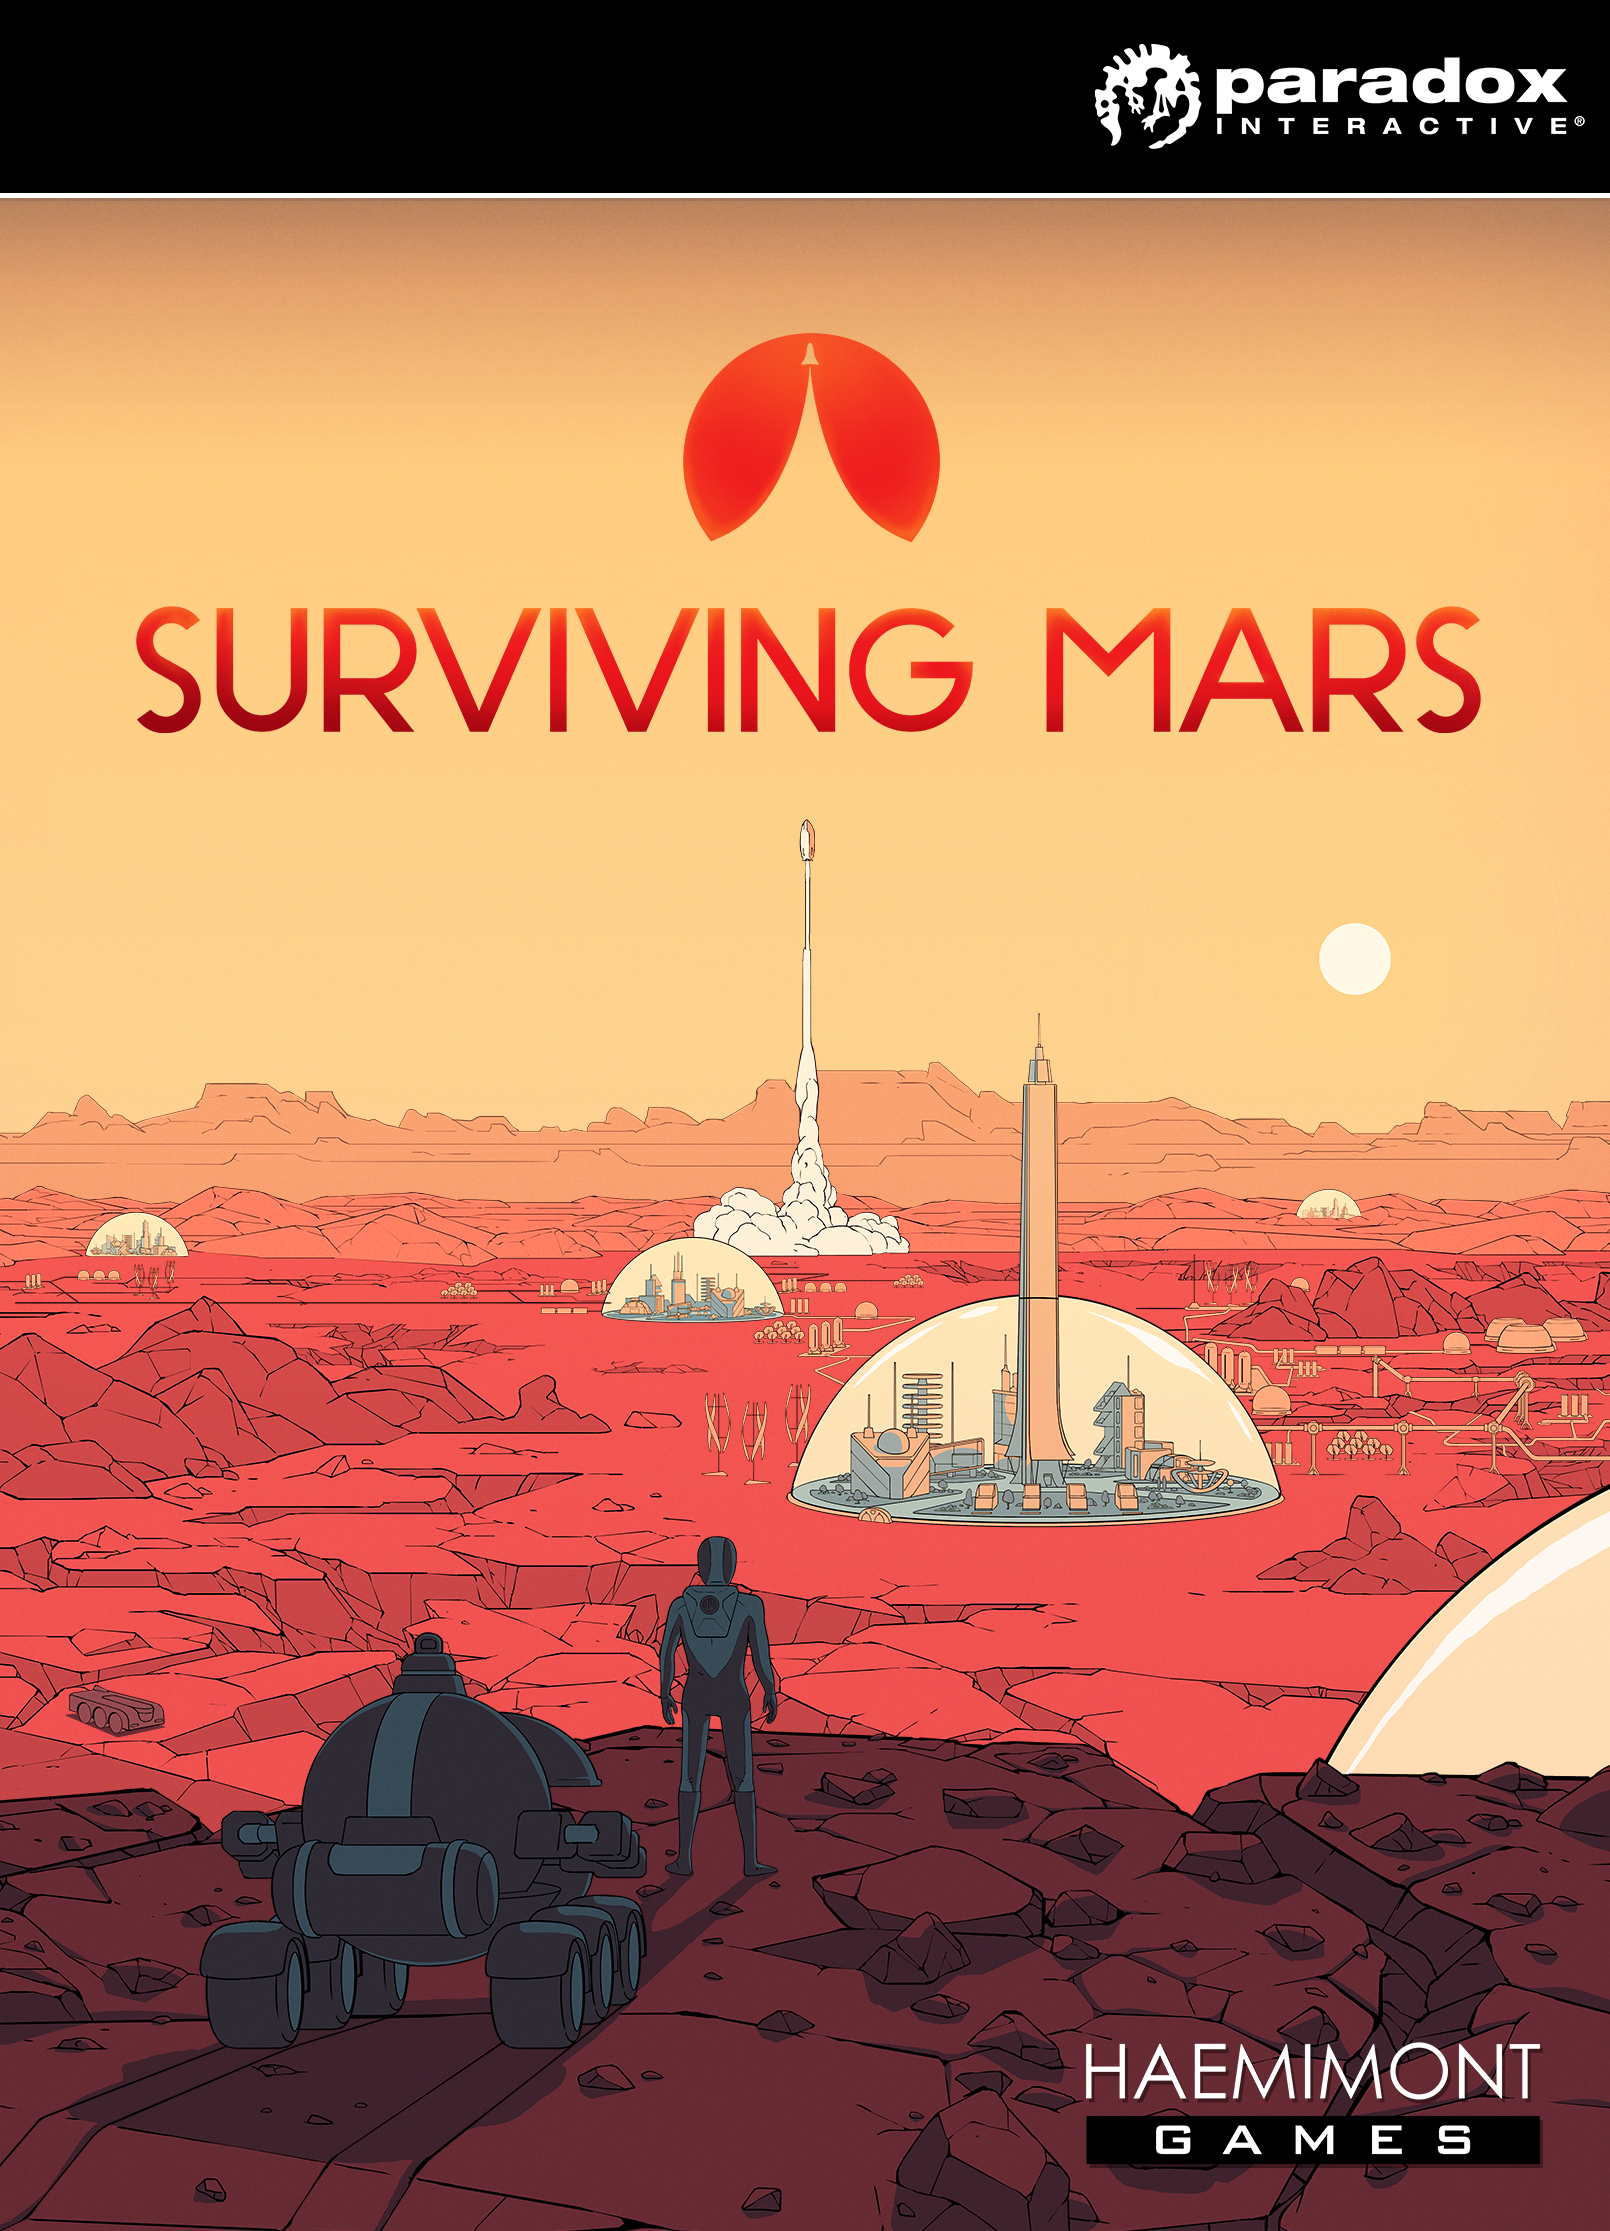 Surviving Mars: Season Pass